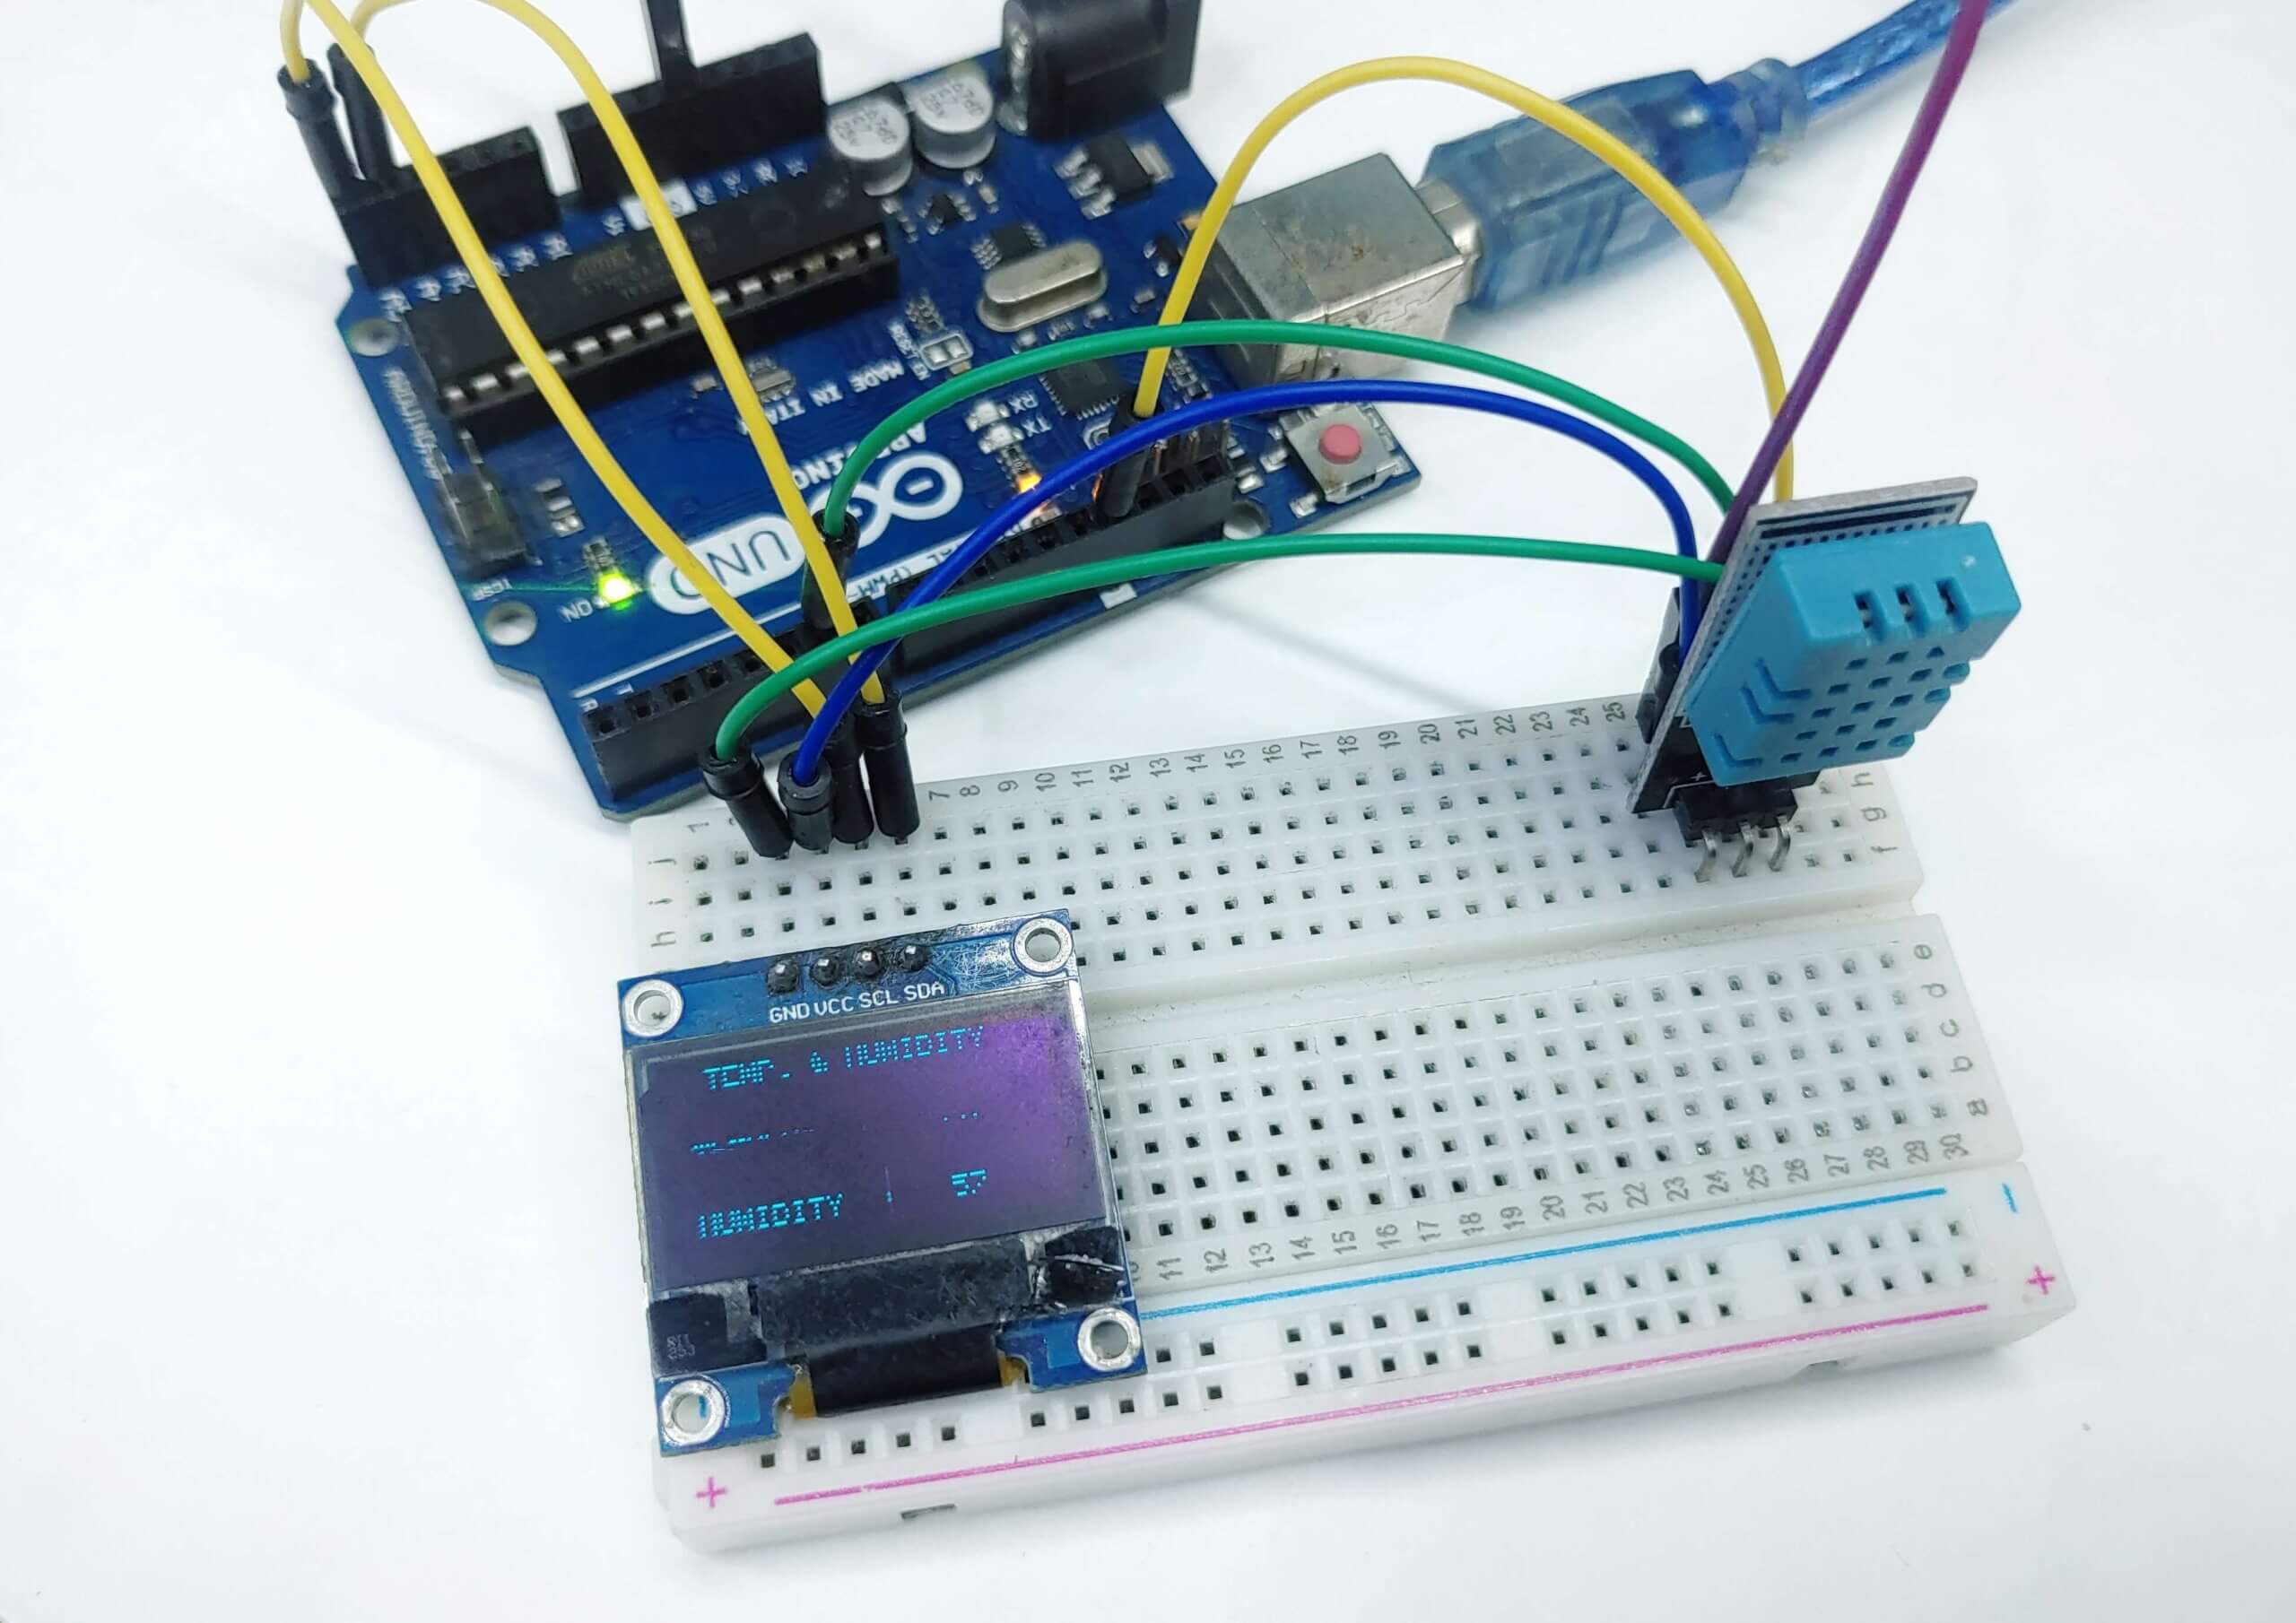 dht11 sensor & OLED display Arduino